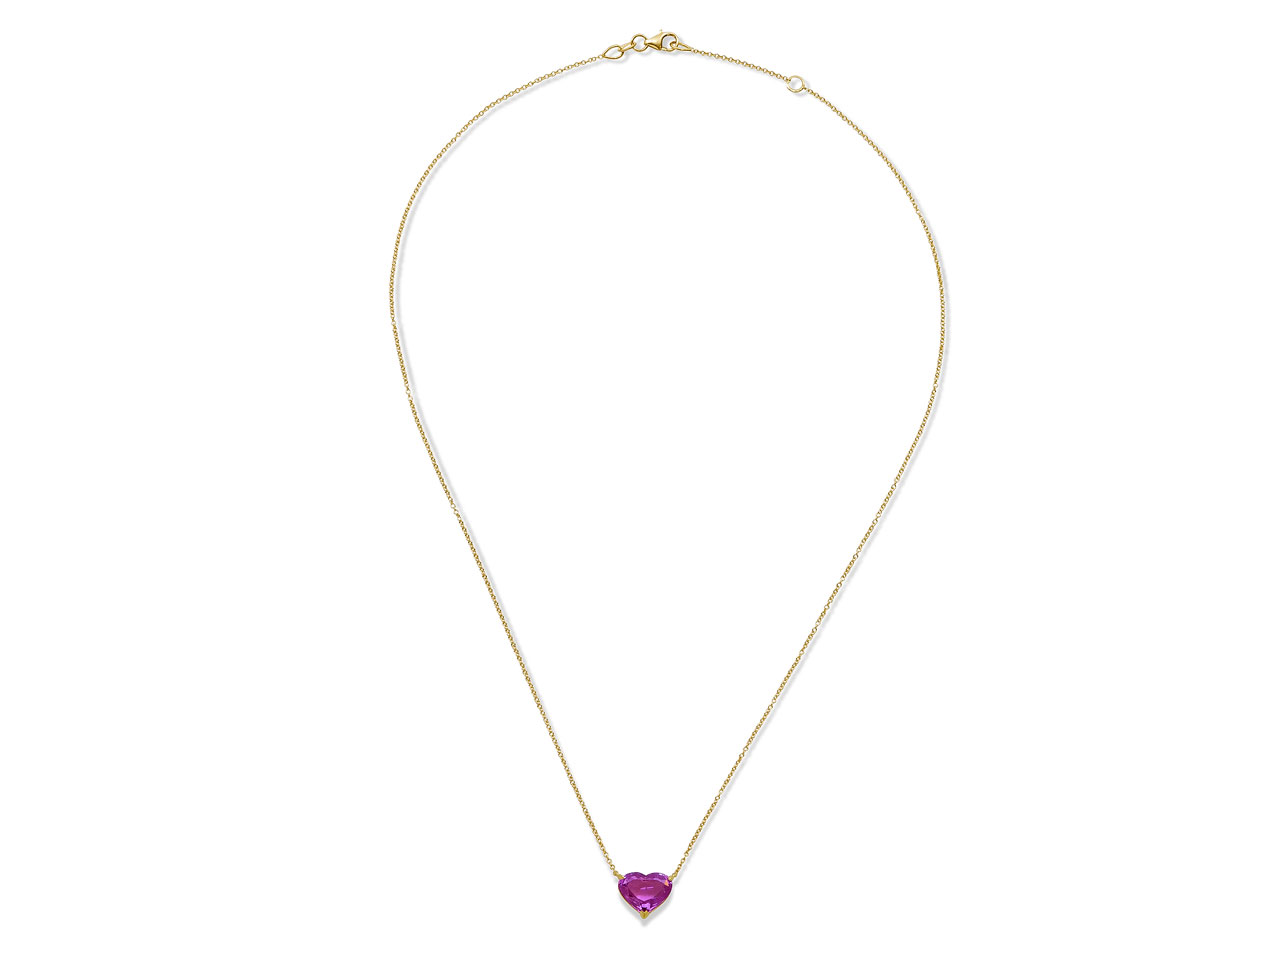 Beladora 'Bespoke' Heart-shape Pink Sapphire, 2.72 carats No Heat, Pendant in 18K Gold